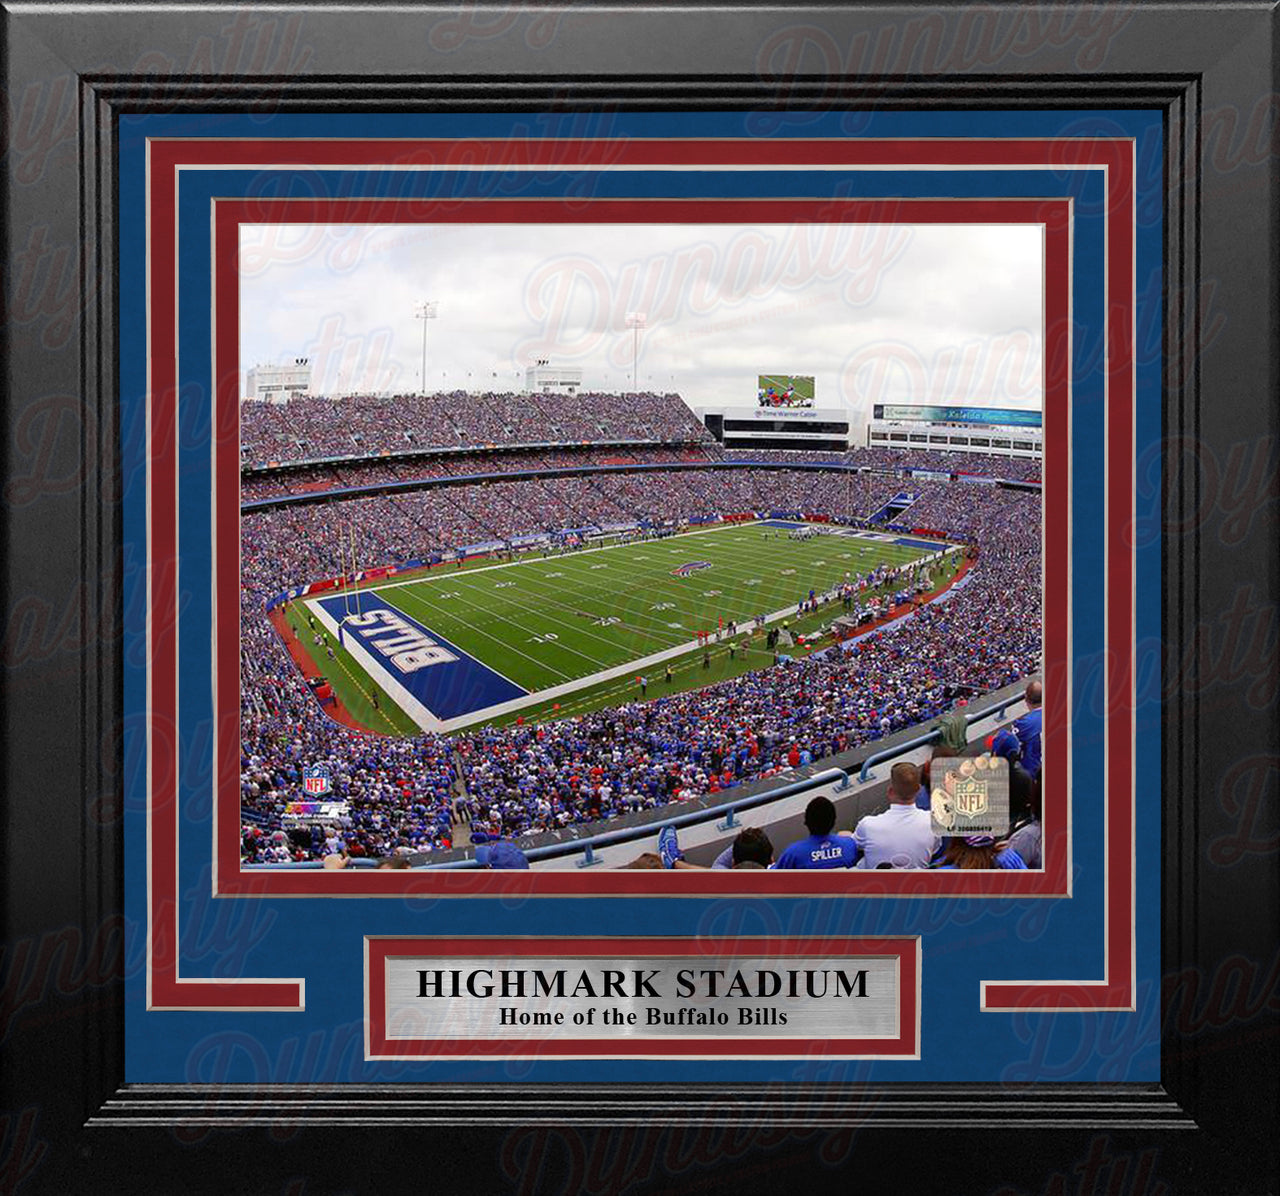 Buffalo Bills Highmark Stadium NFL Football 8" x 10" Framed and Matted Stadium Photo - Dynasty Sports & Framing 